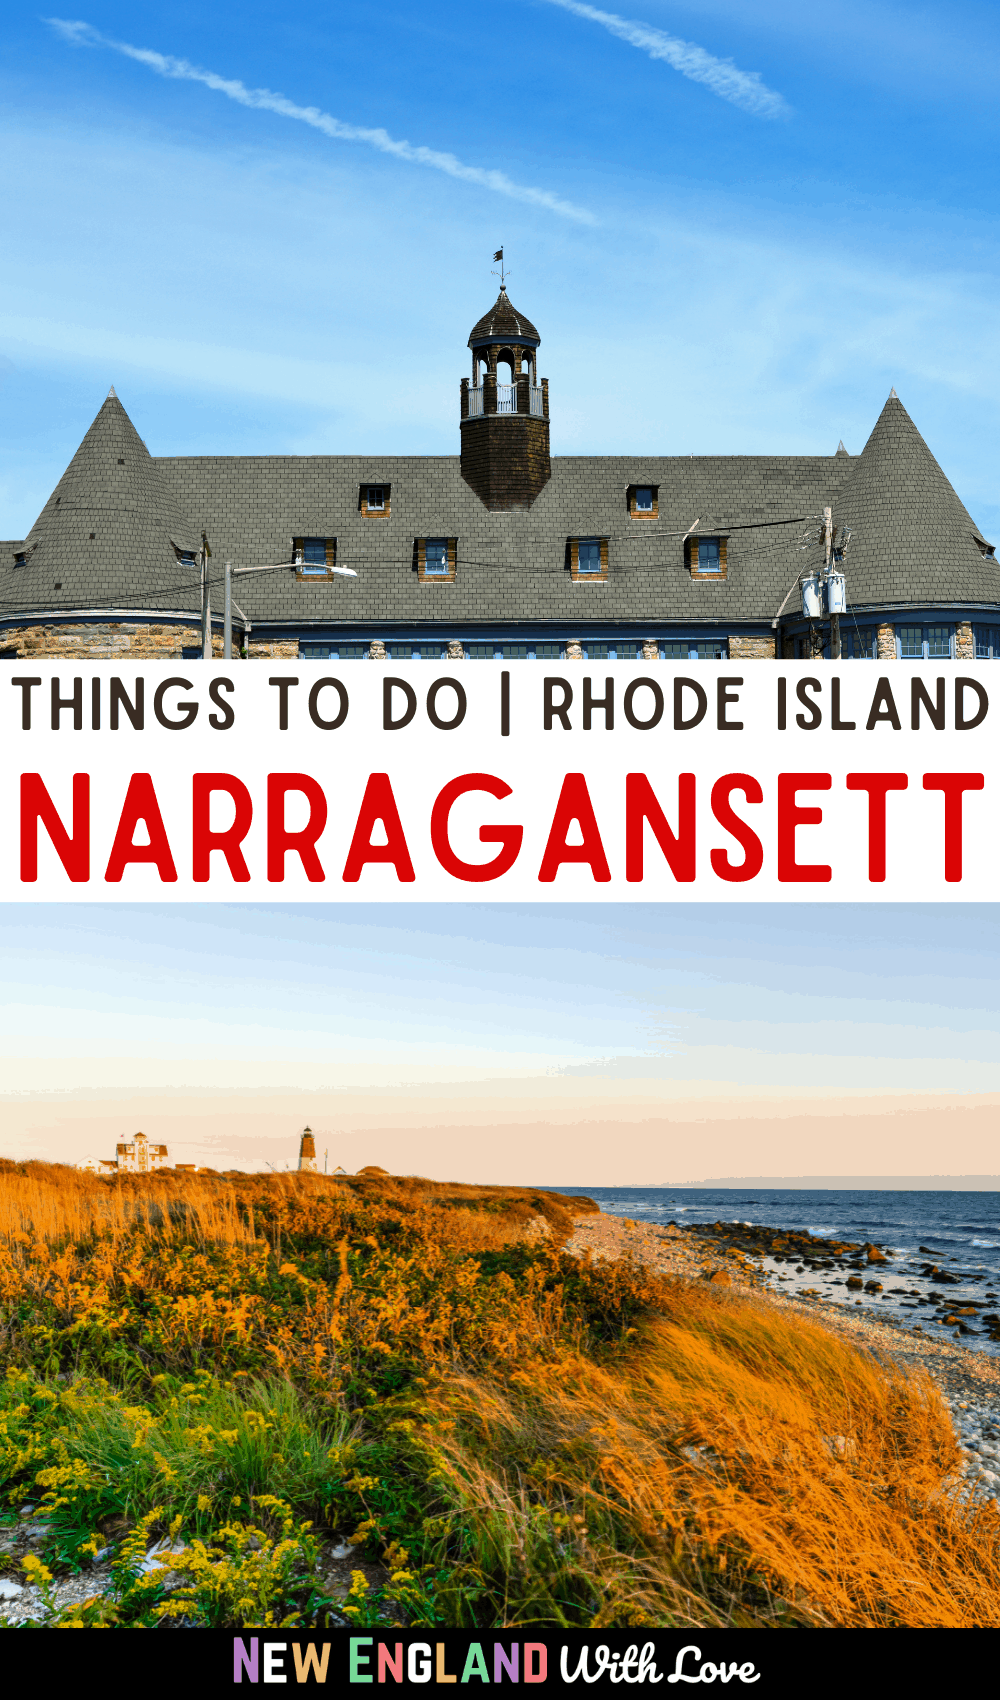 Pinterest graphic reading "THINGS TO DO RHODE ISLAND NARRAGANSETT"